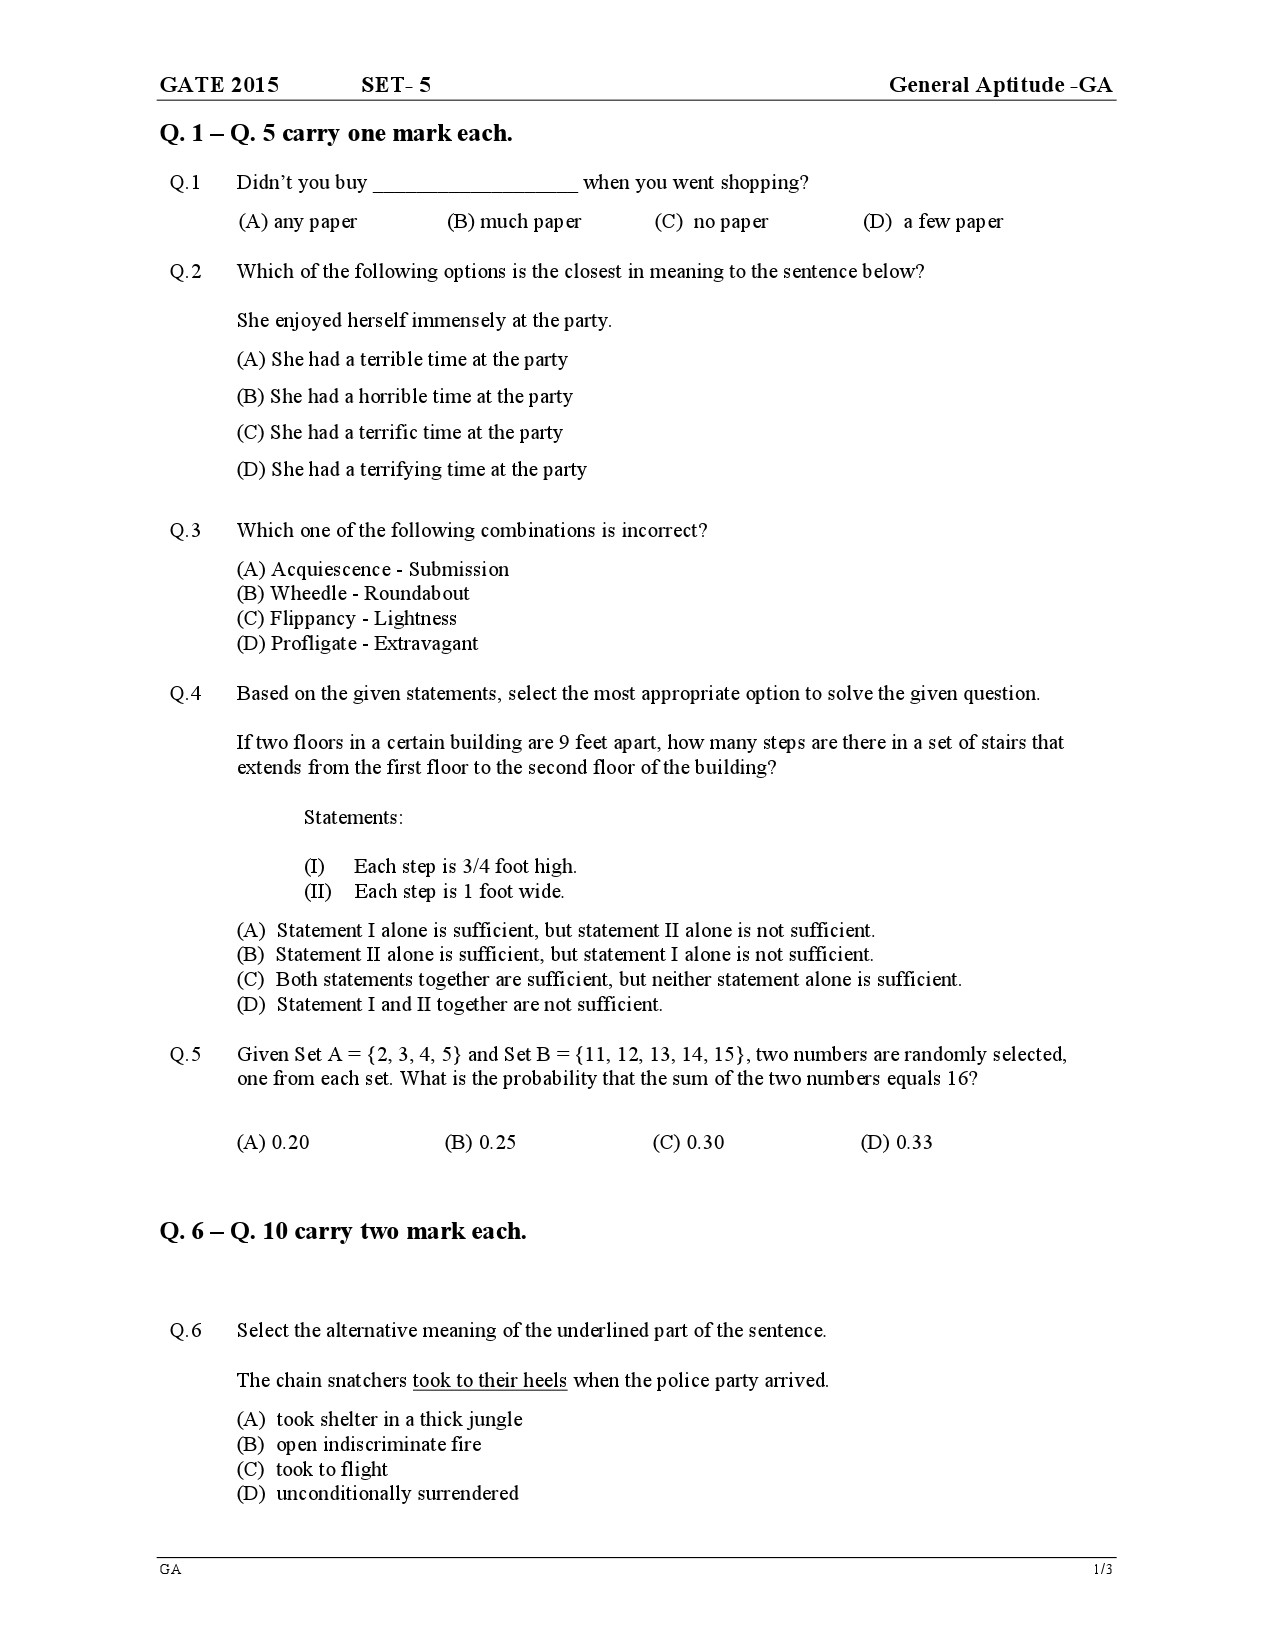 GATE Exam Question Paper 2015 General Aptitude 9